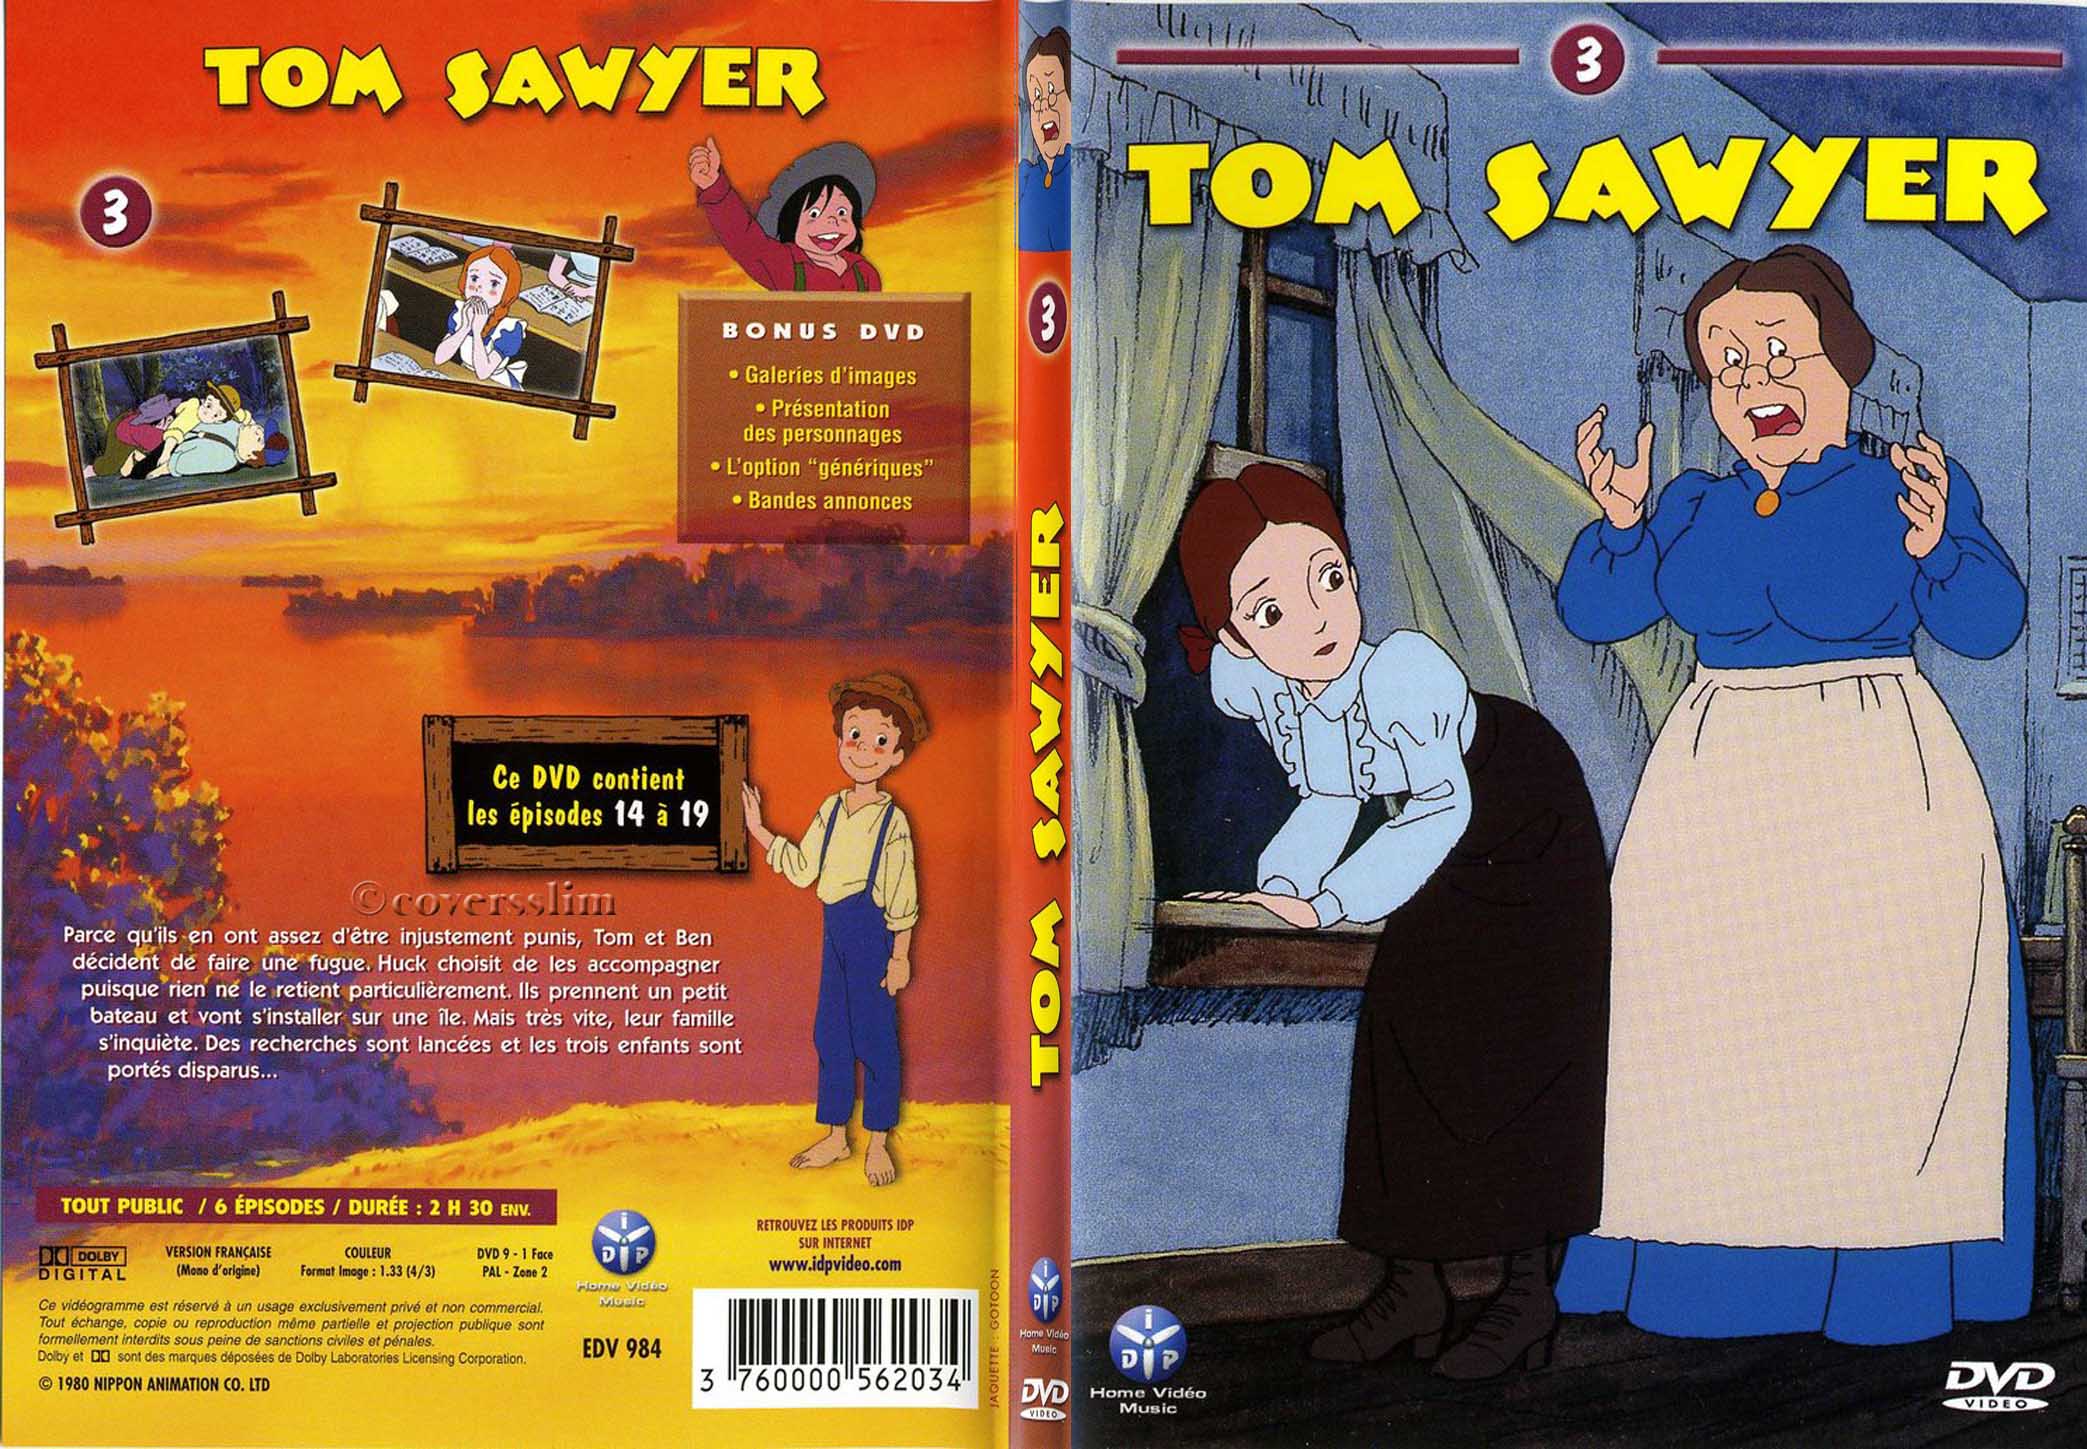 Jaquette DVD Tom Sawyer vol 3 - SLIM